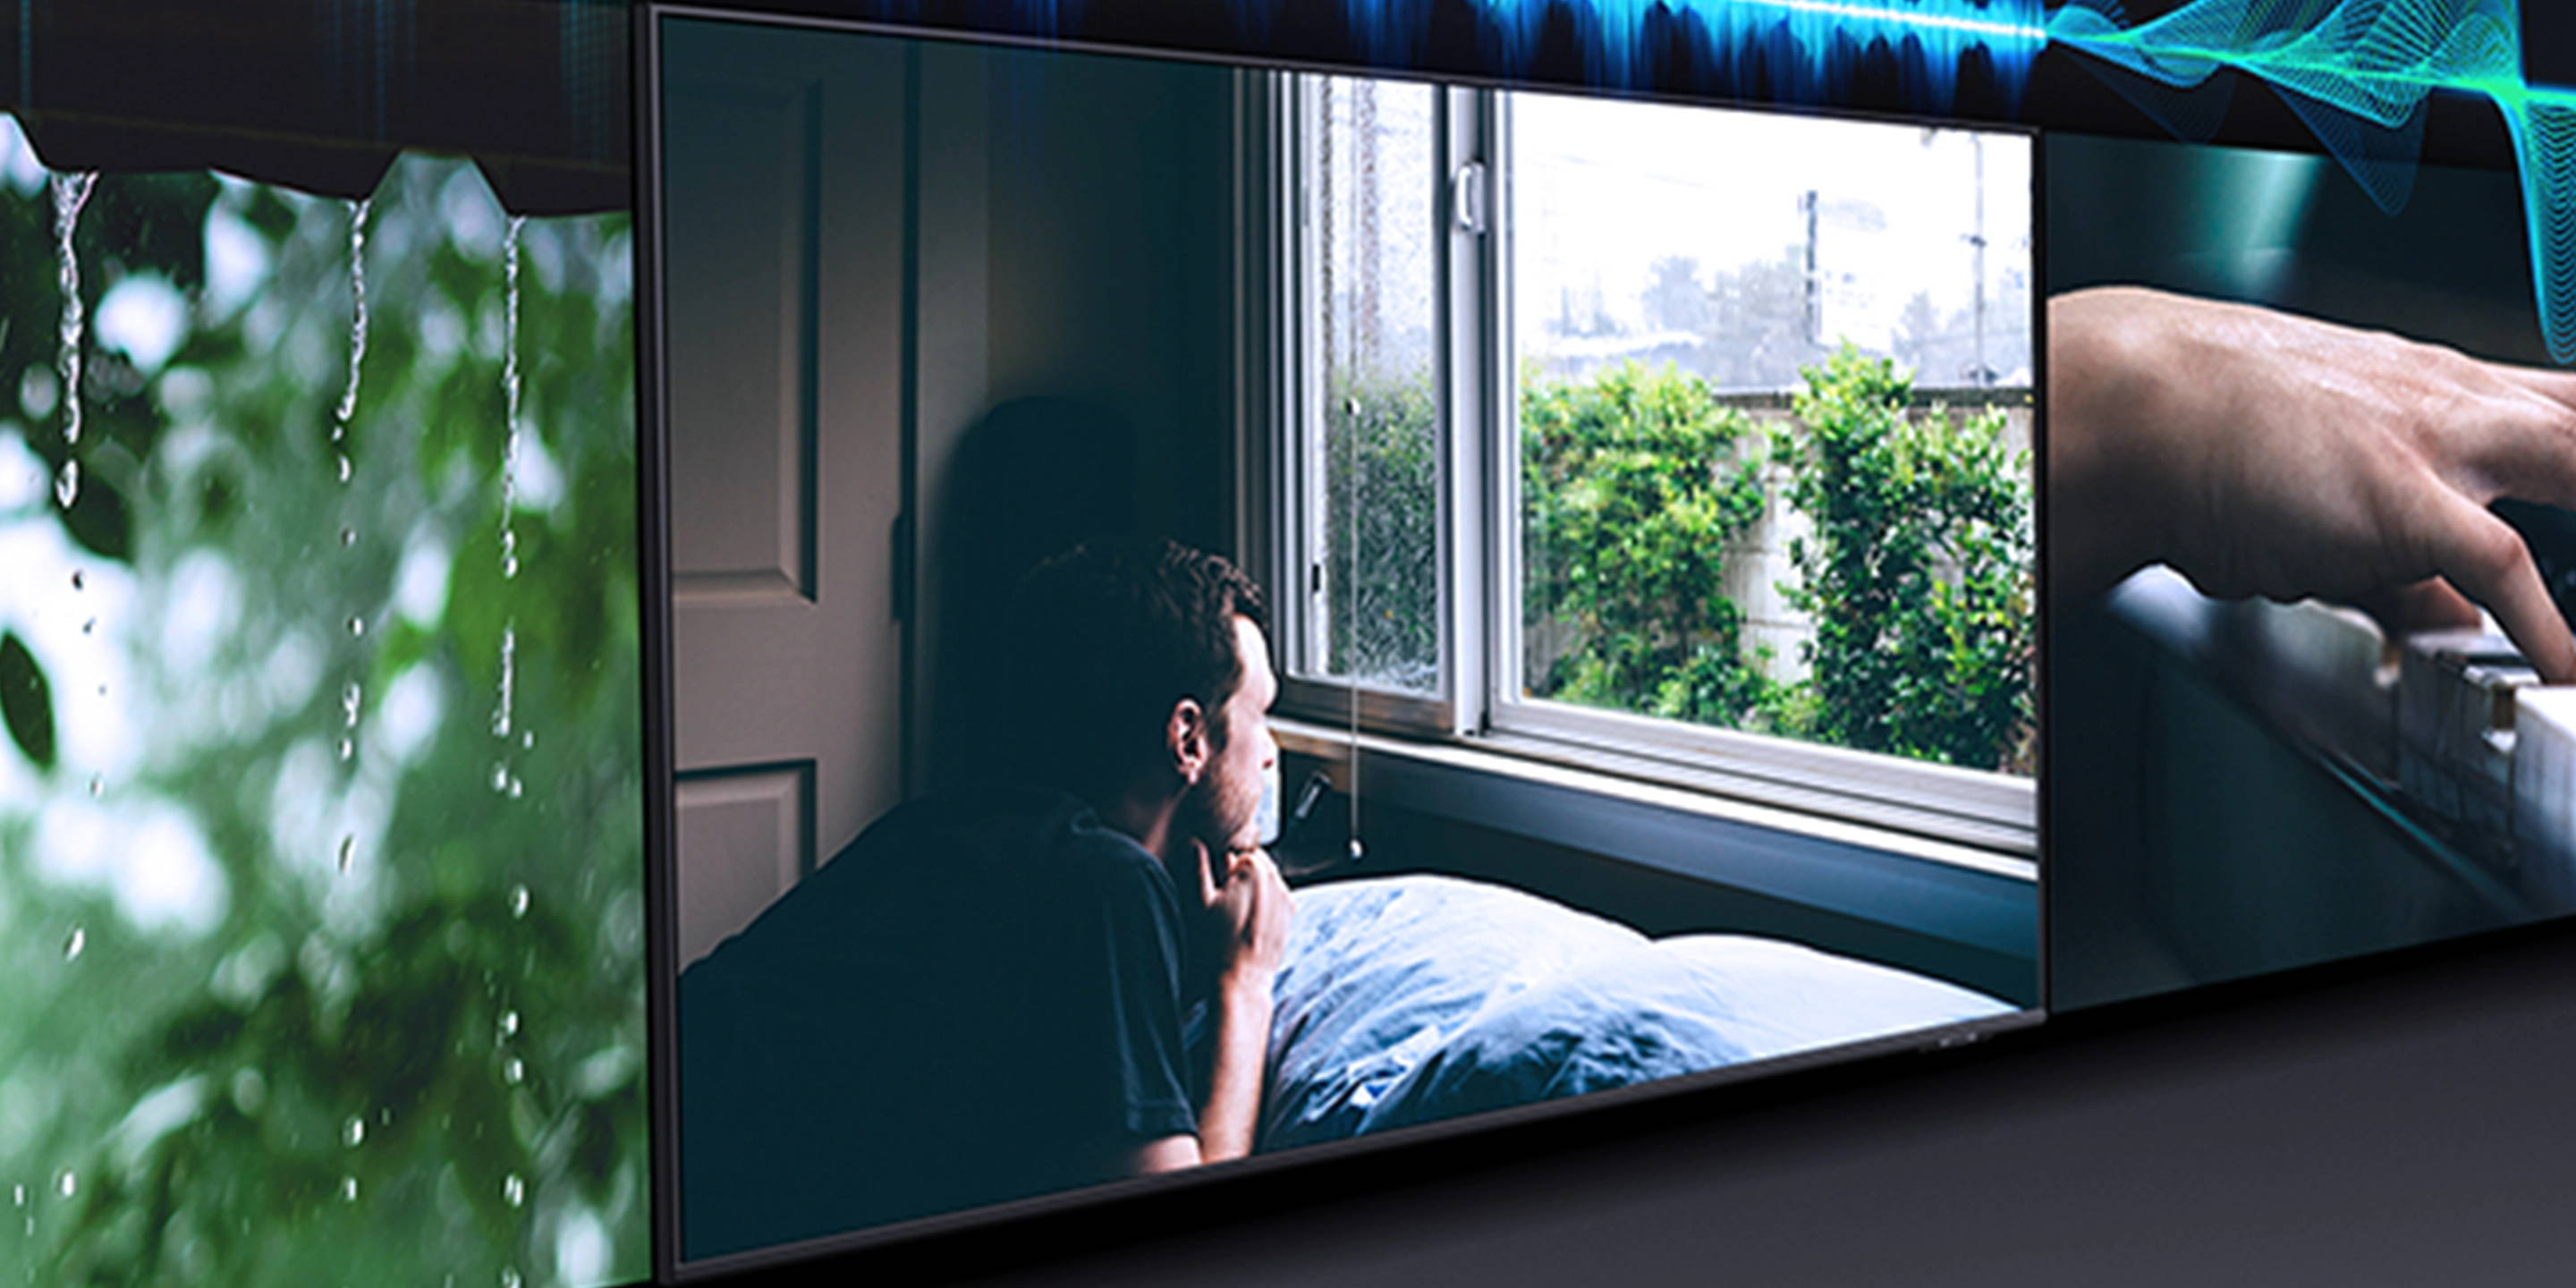 Samsung AU800 Series Hospitality TV Television